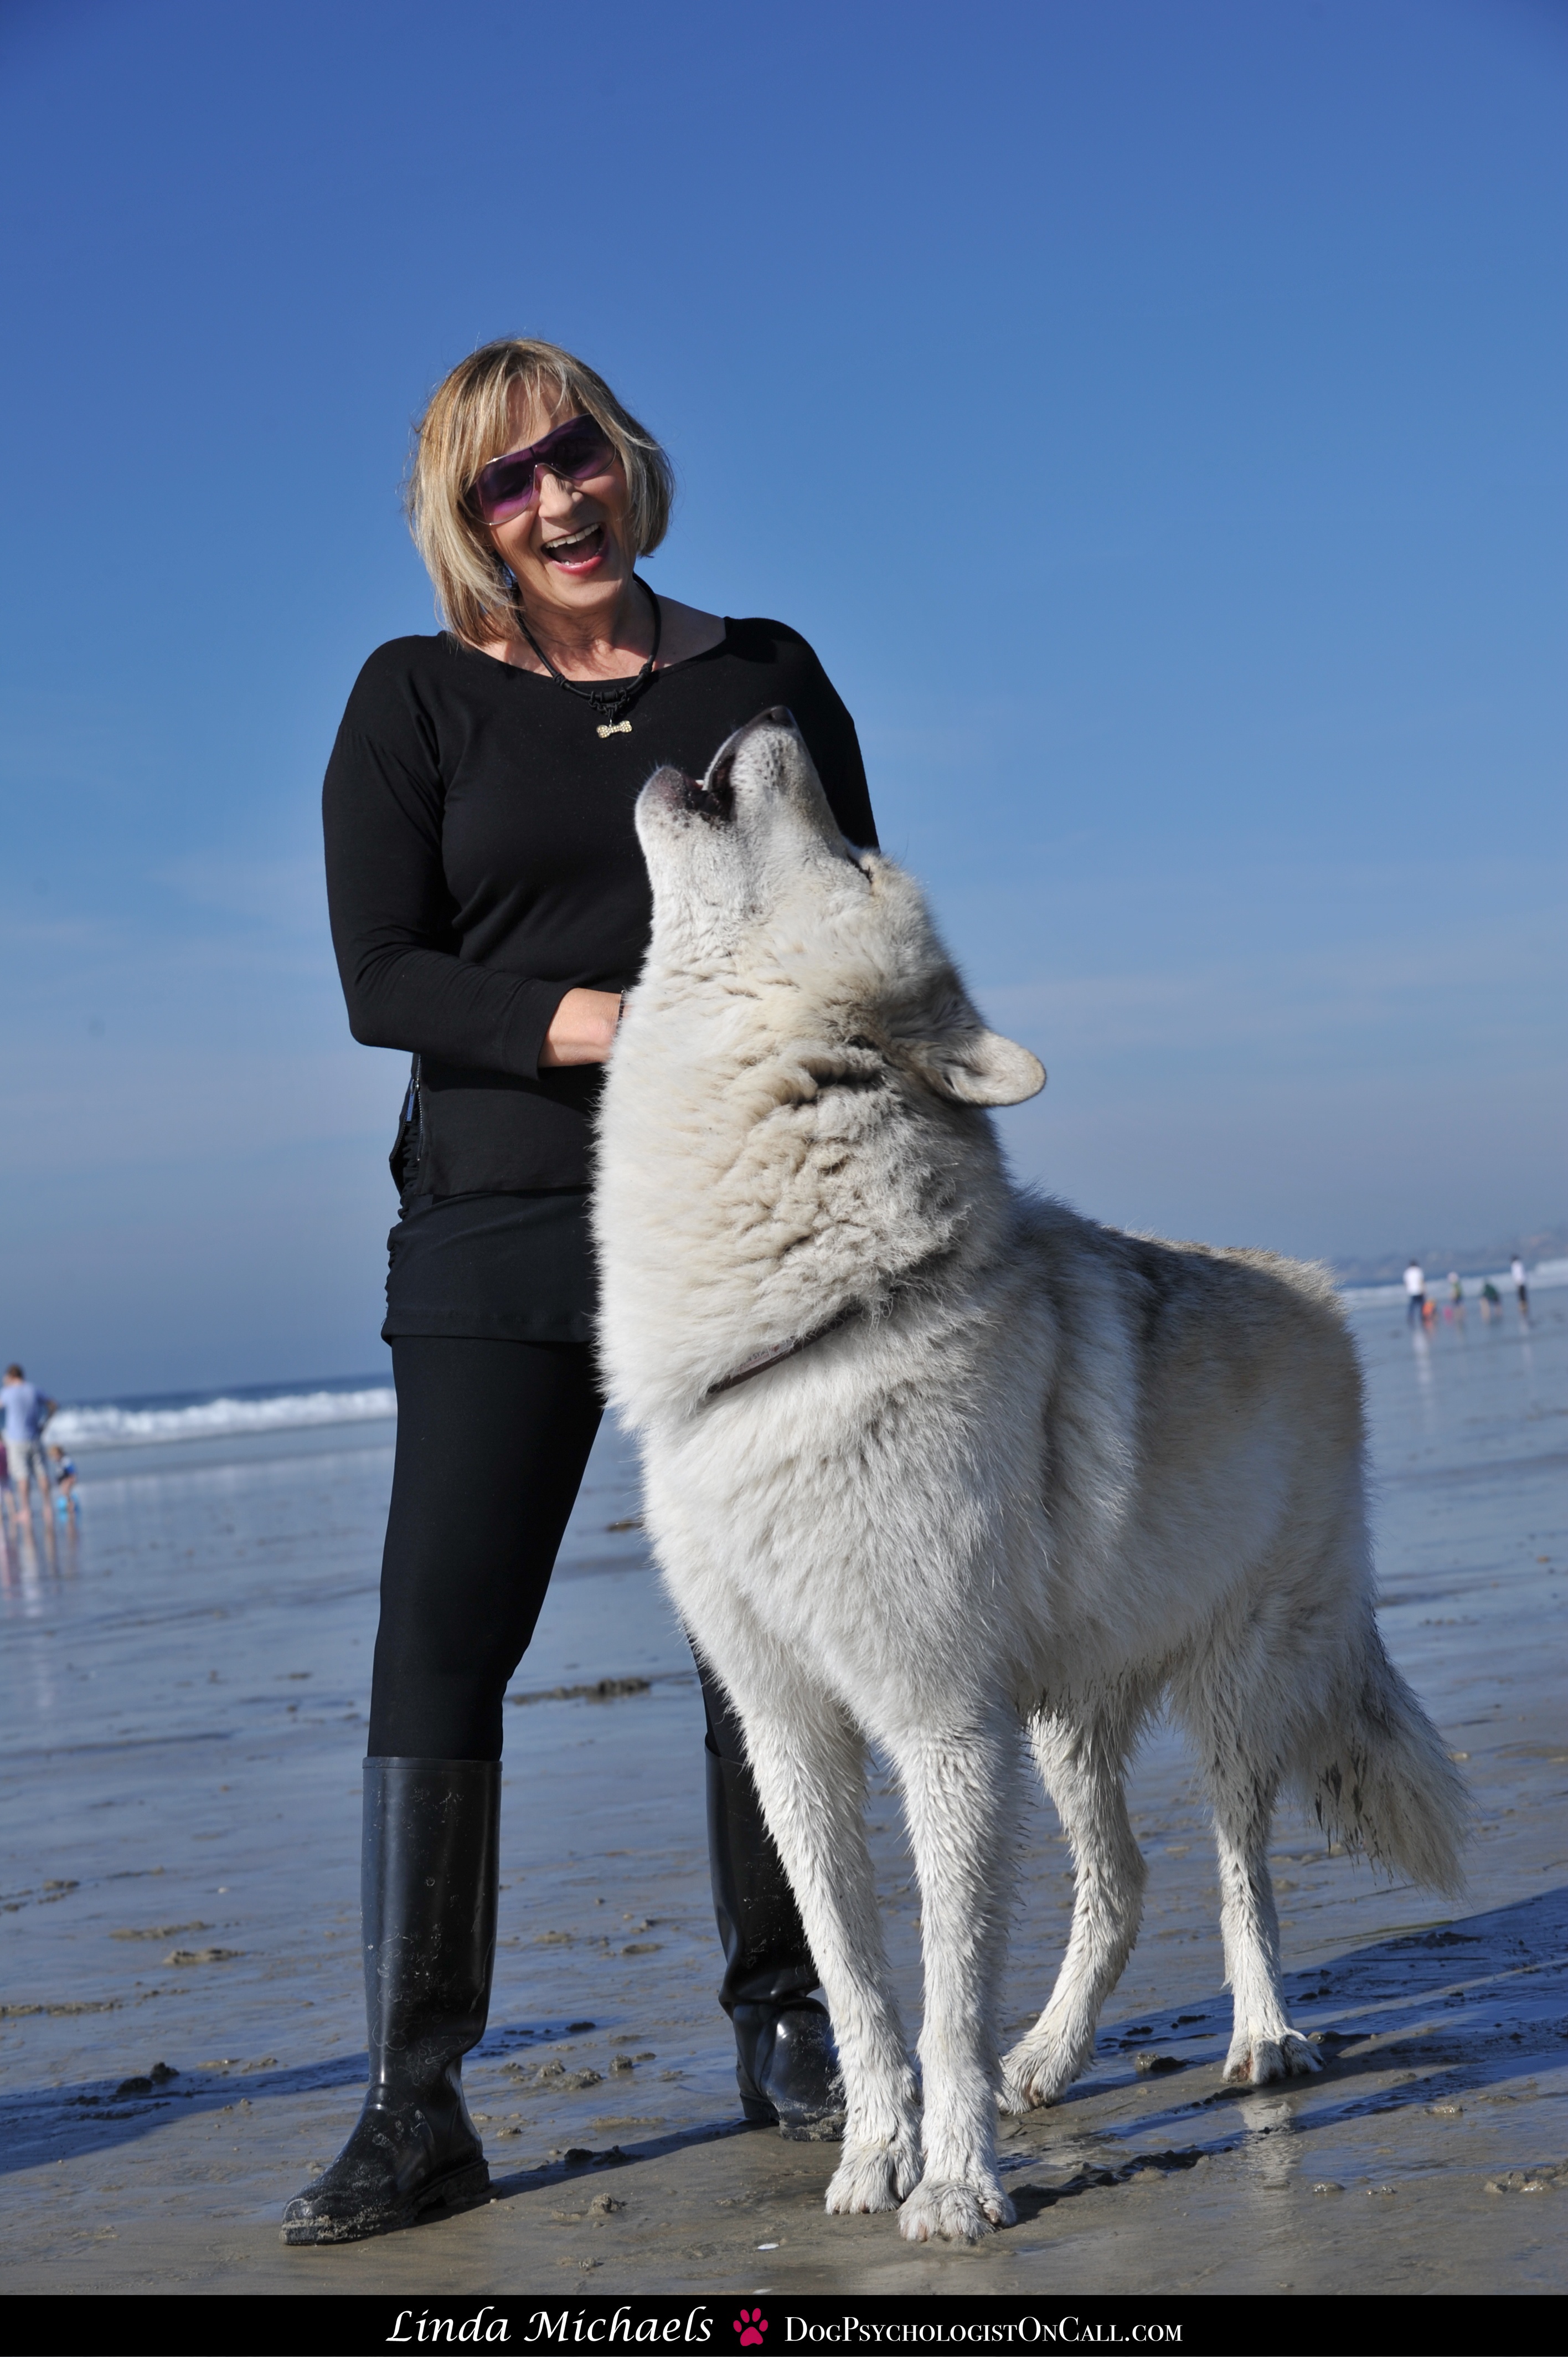 ambassador journey and linda michaels, ma psychology, dog psychologist del mar dog trainer wolfdog training